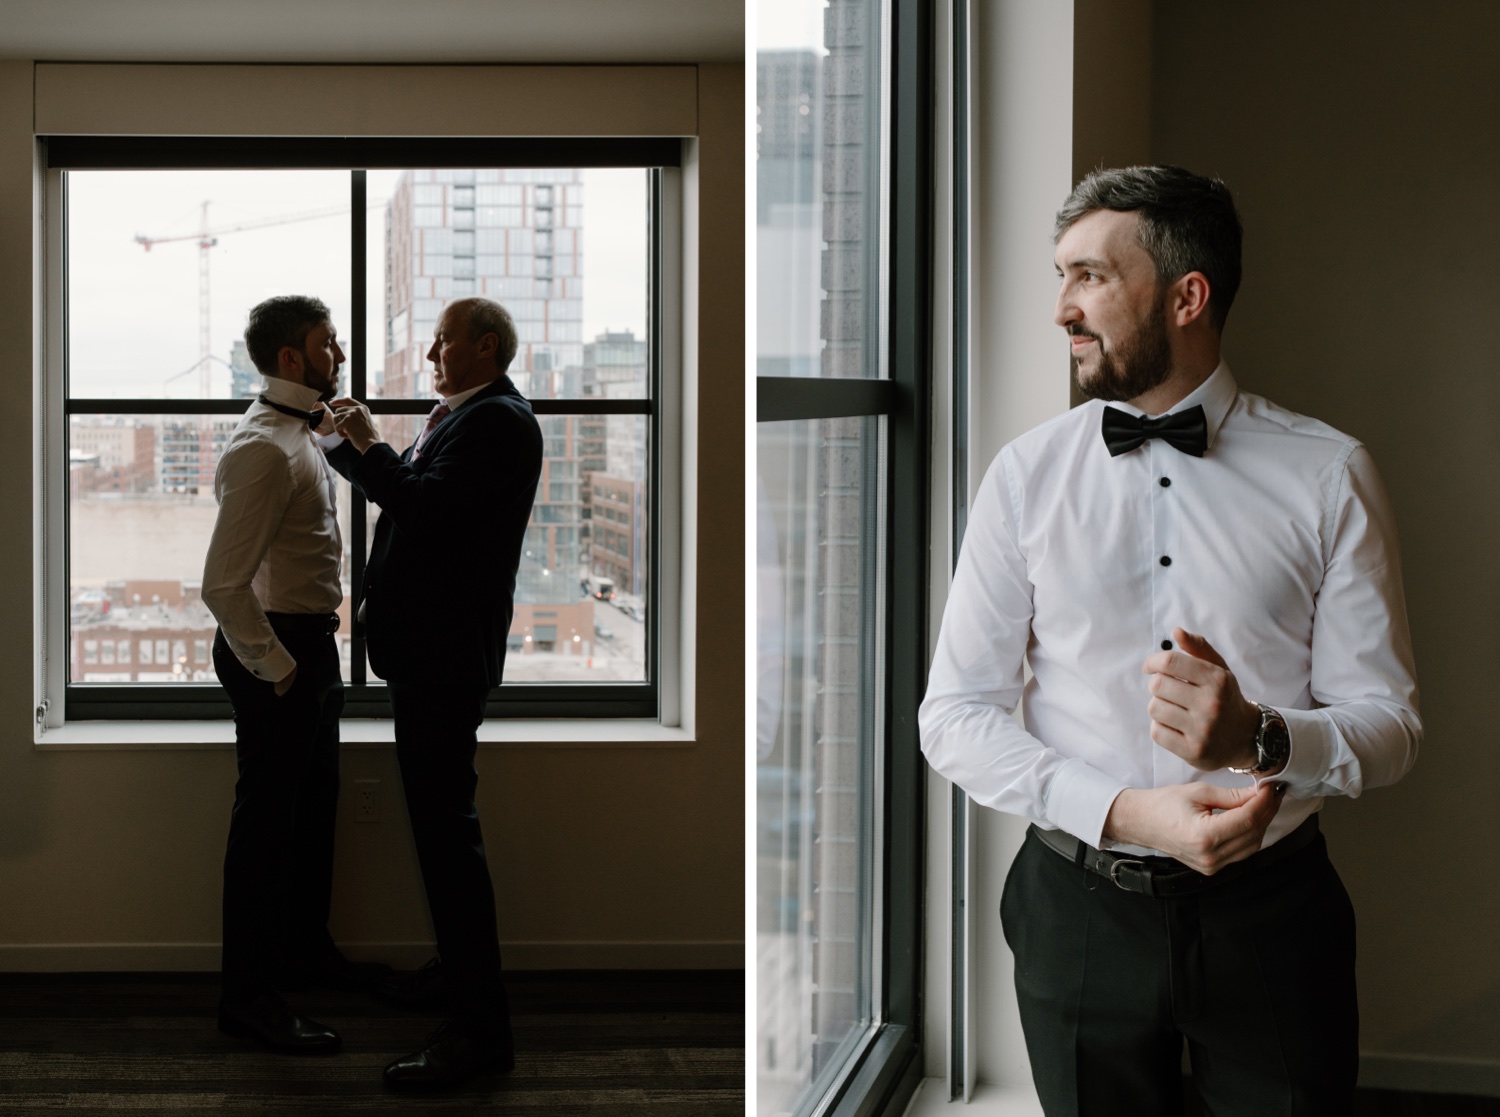 City View Loft Chicago Wedding | Chicago Wedding Photographer